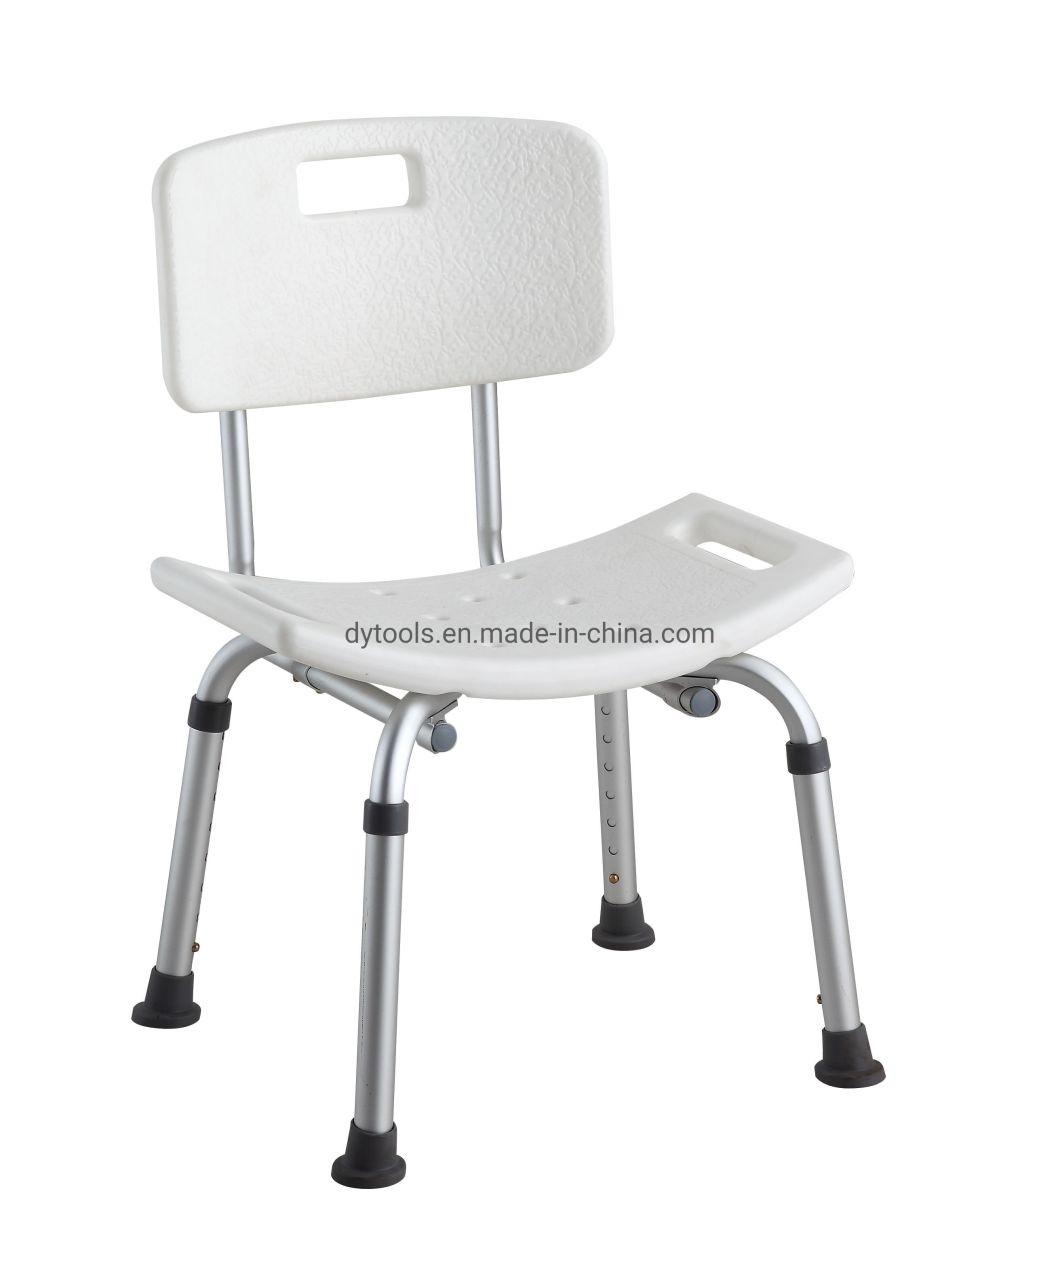 Adjustable Portable Shower Chair Bath Stool